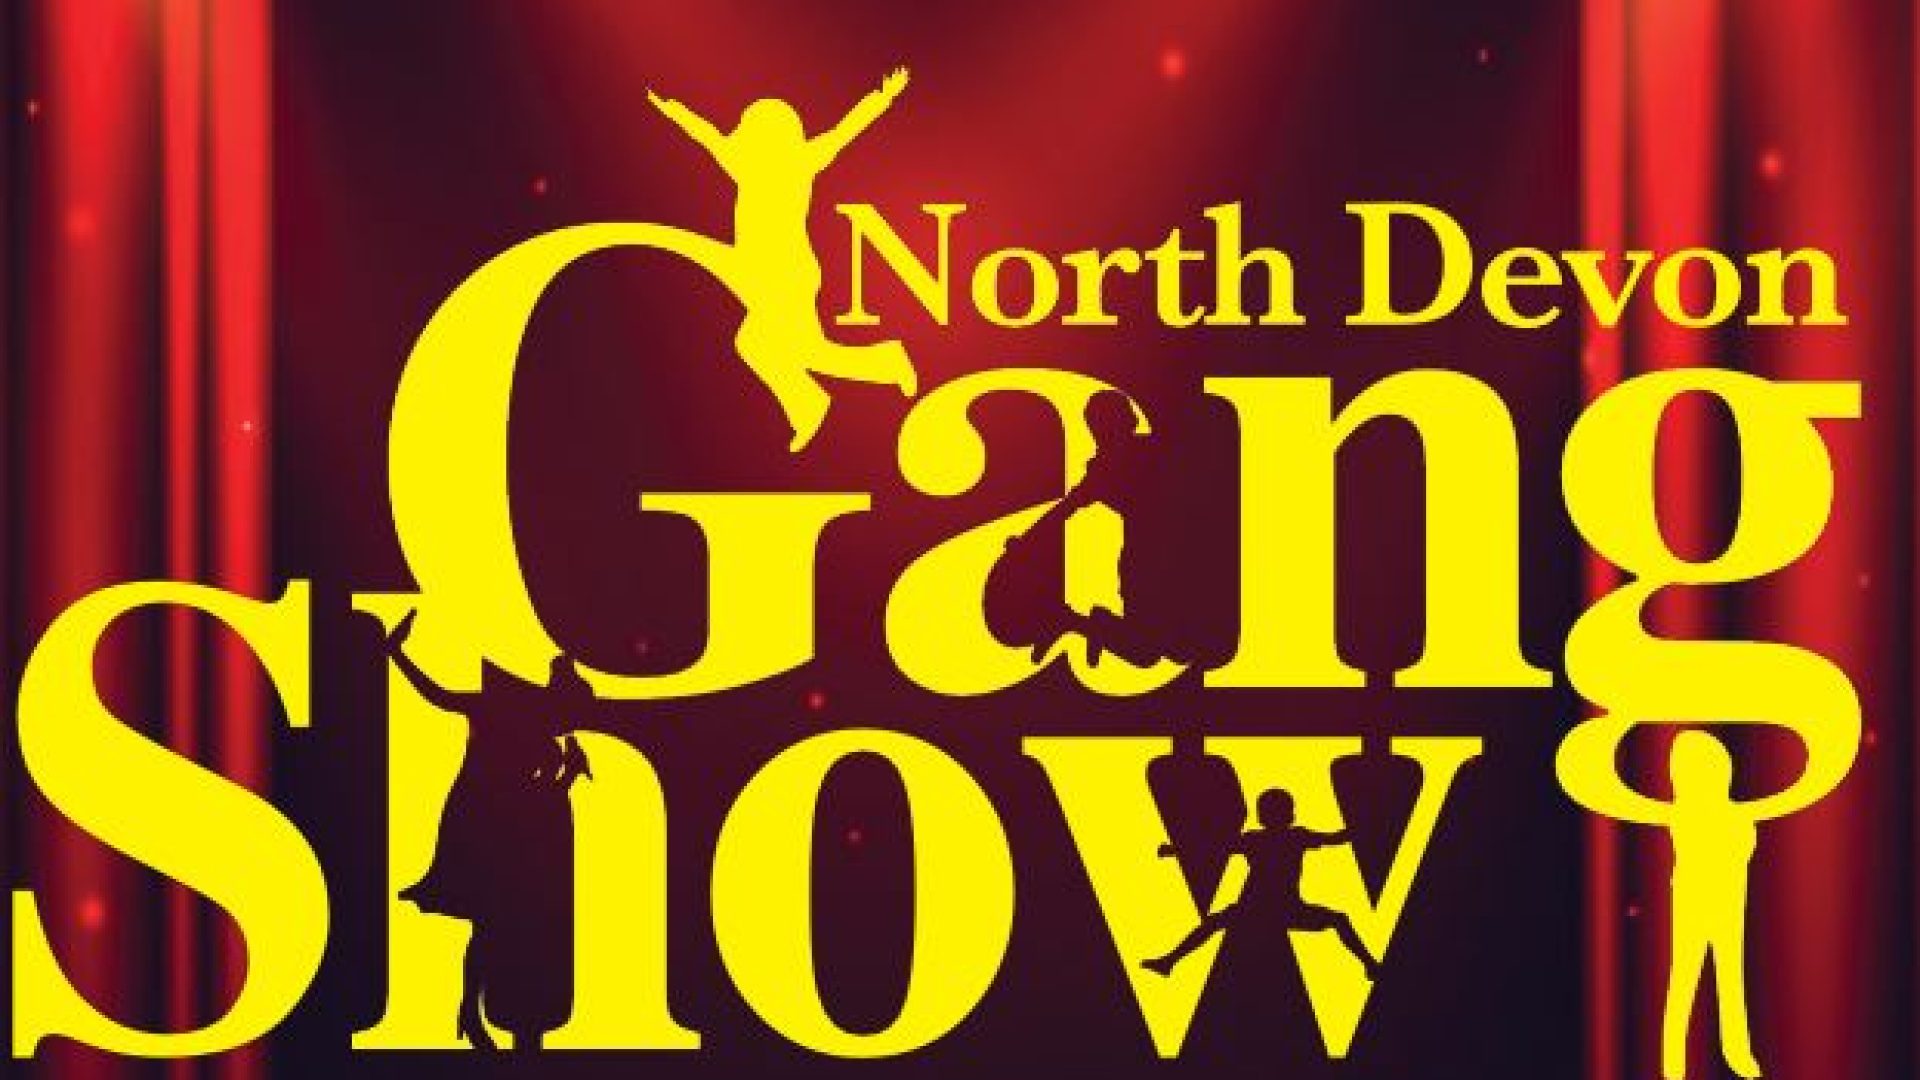 North Devon Gang Show